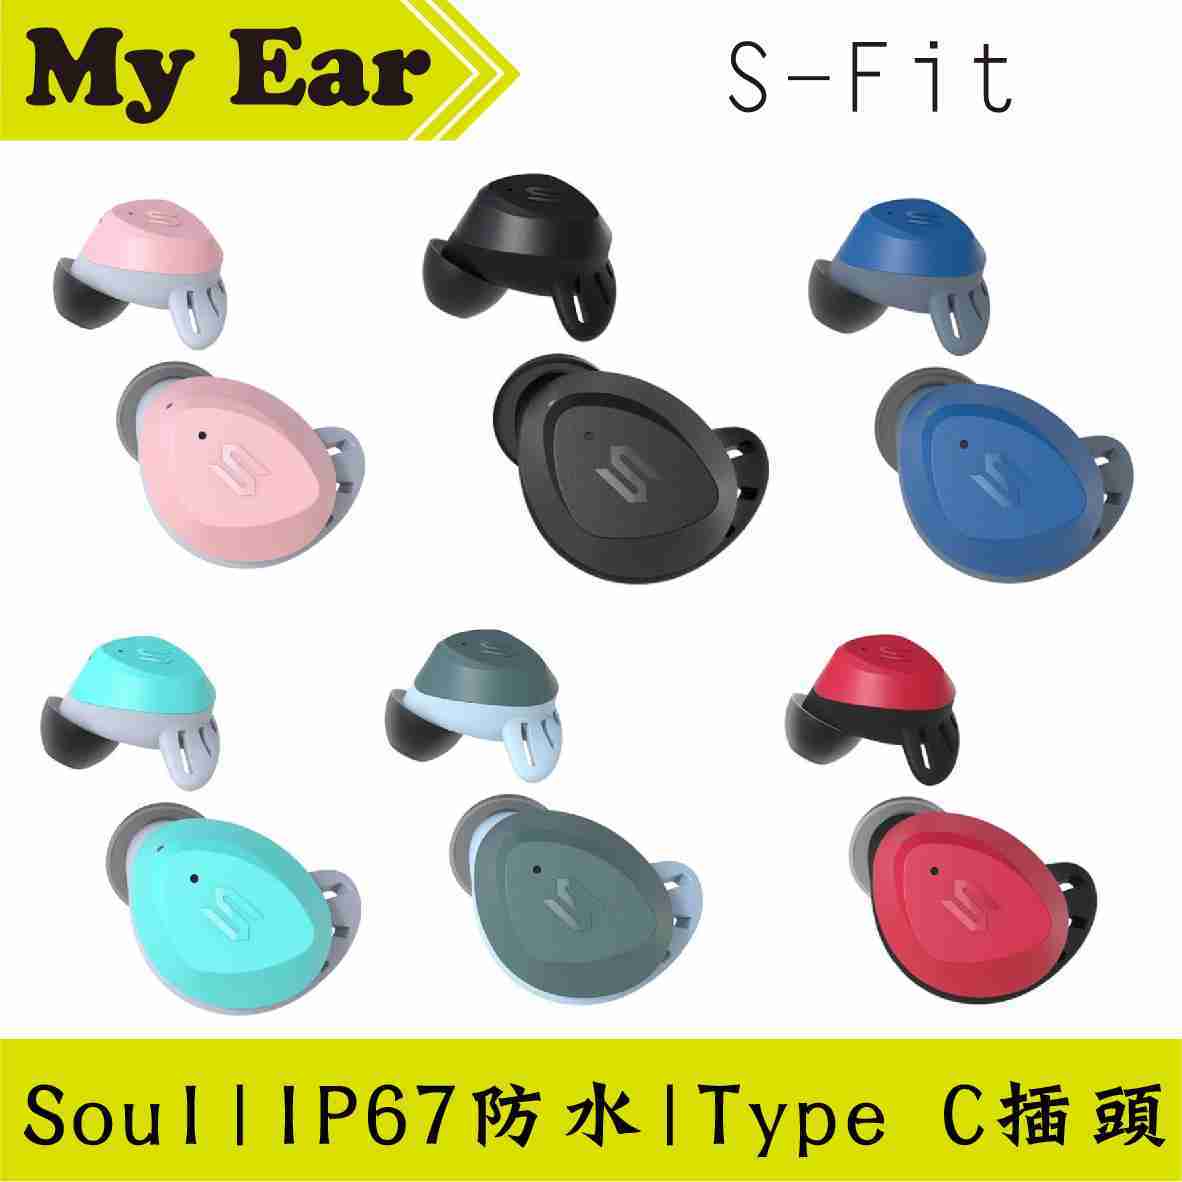 Soul S-Fit 淺綠色 環境音效 IP67 防塵 防水 藍芽 耳機 | My Ear 耳機專門店